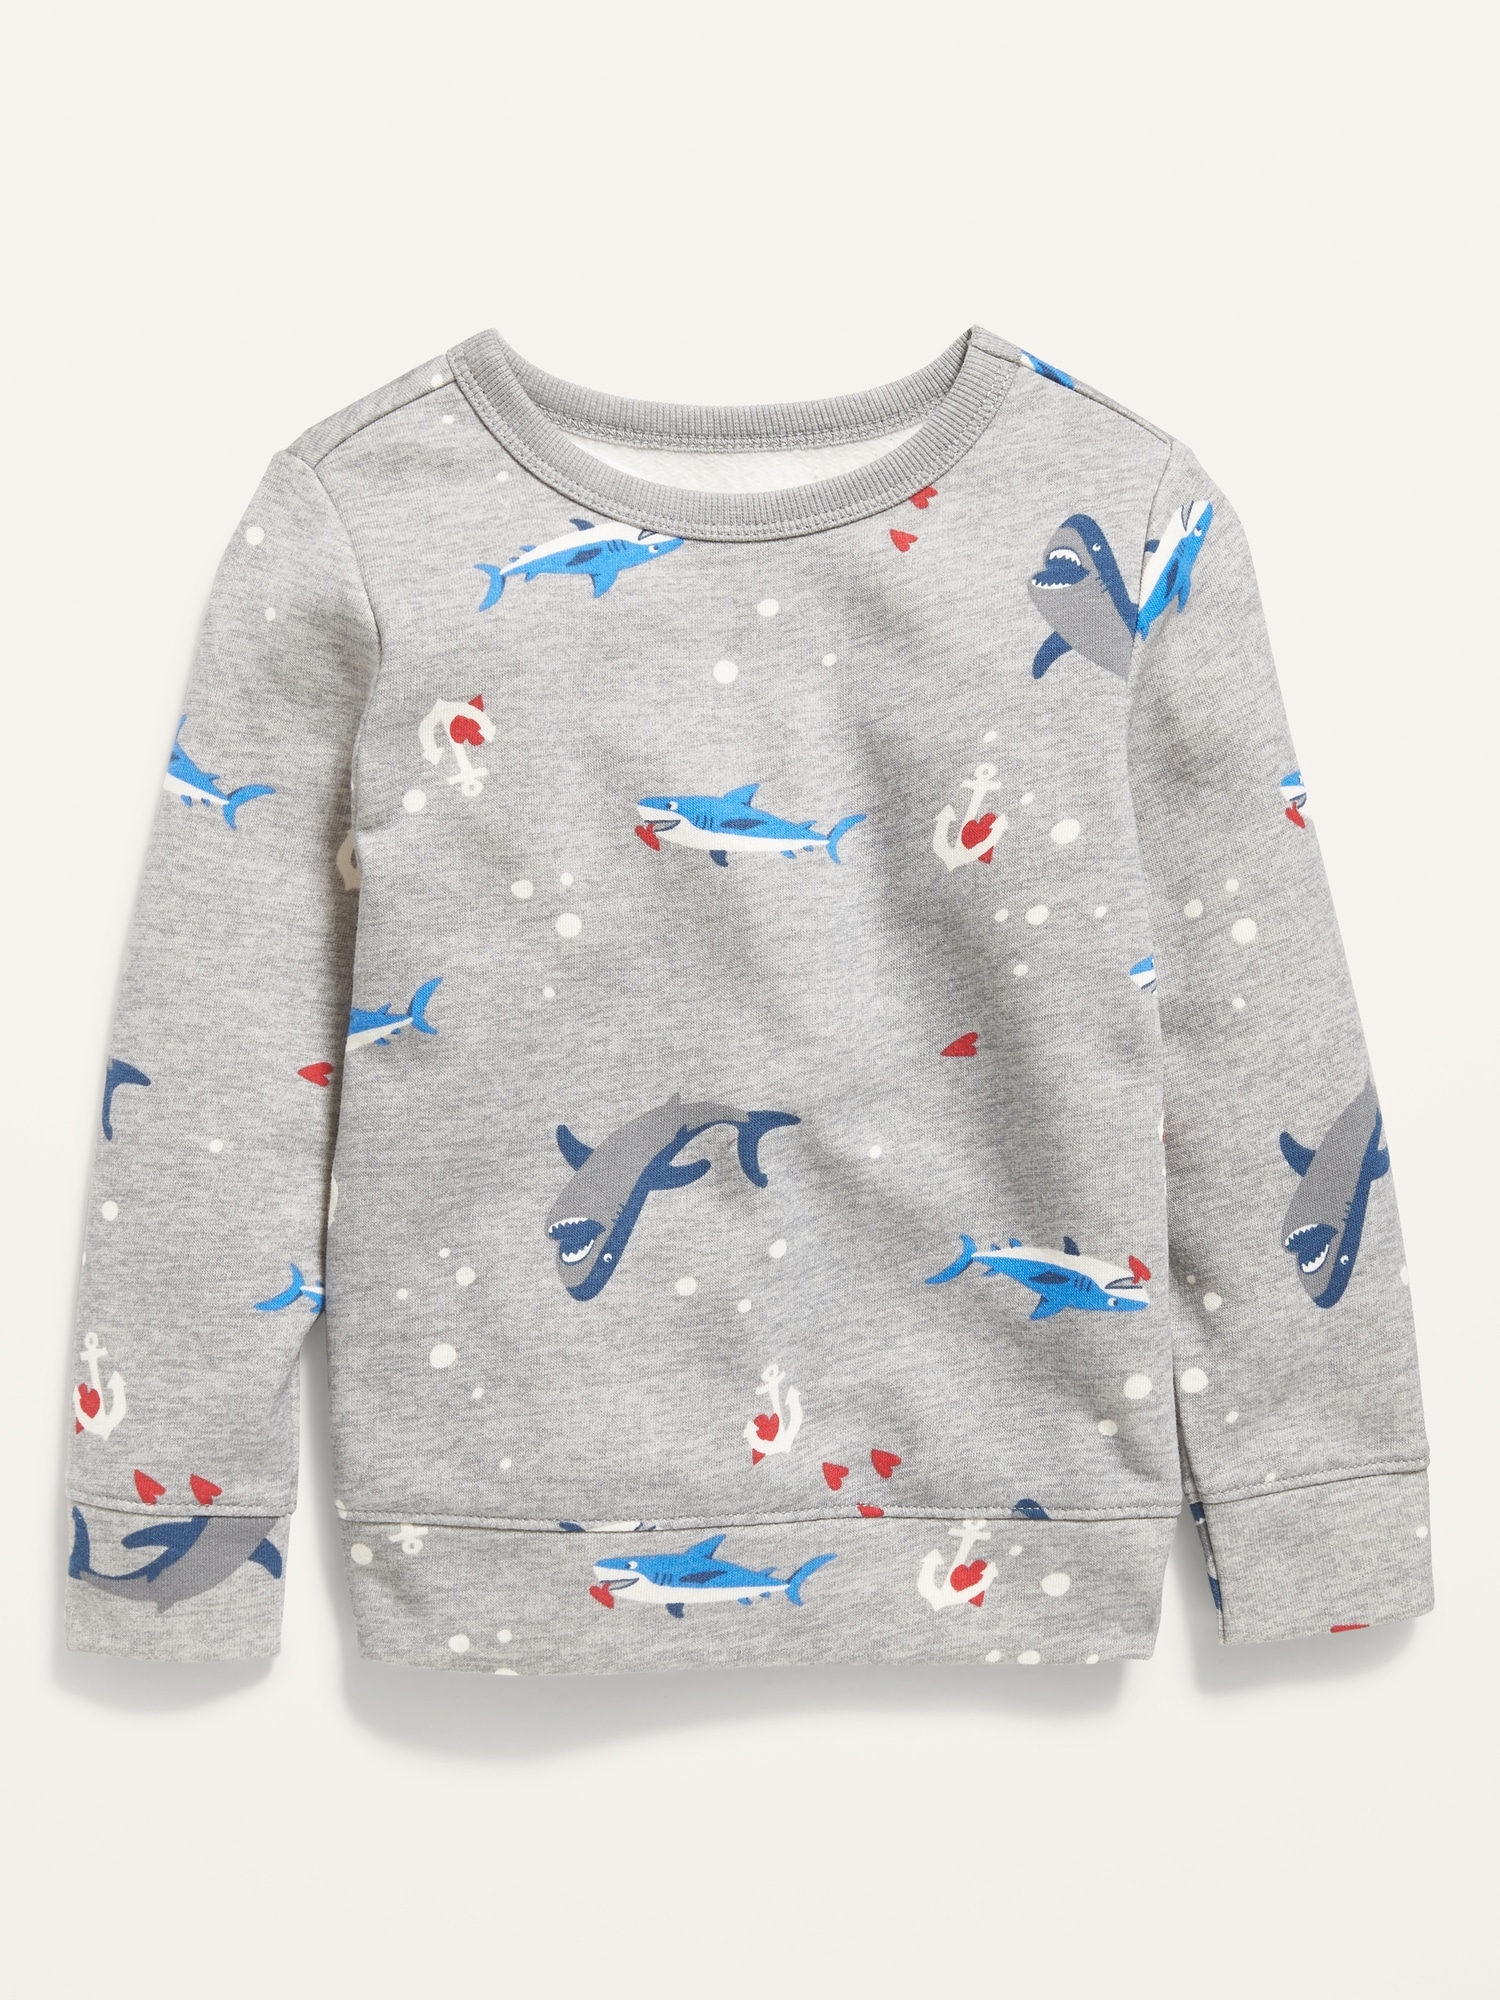 Unisex Shark-Print Sweatshirt for Toddler